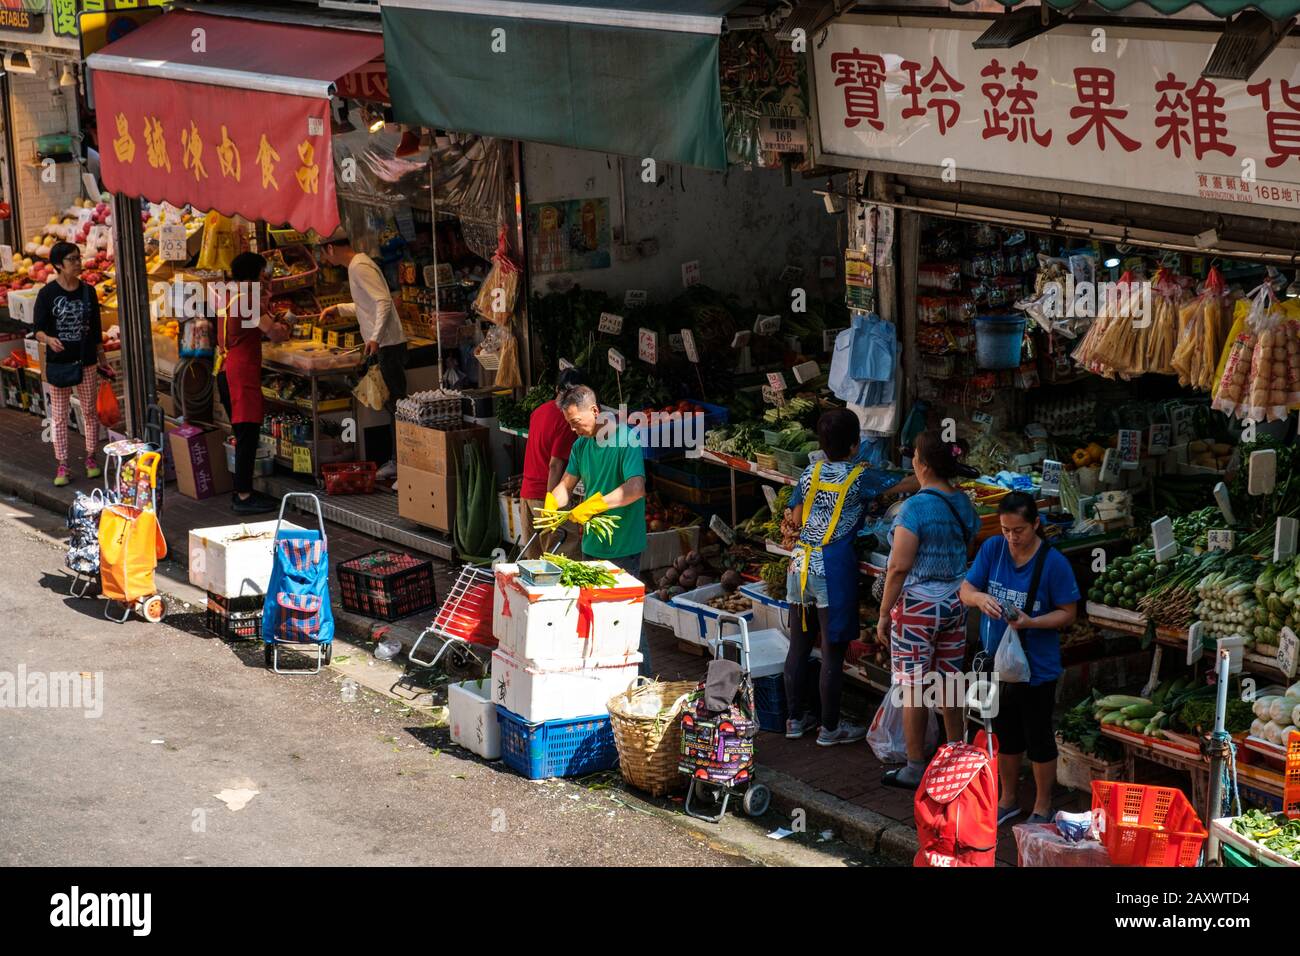 Hong Kong, novembre 2019: Persone sul mercato di strada che acquistano e vendono cibo a Shim Shui po, Hong Kong, Cina Foto Stock